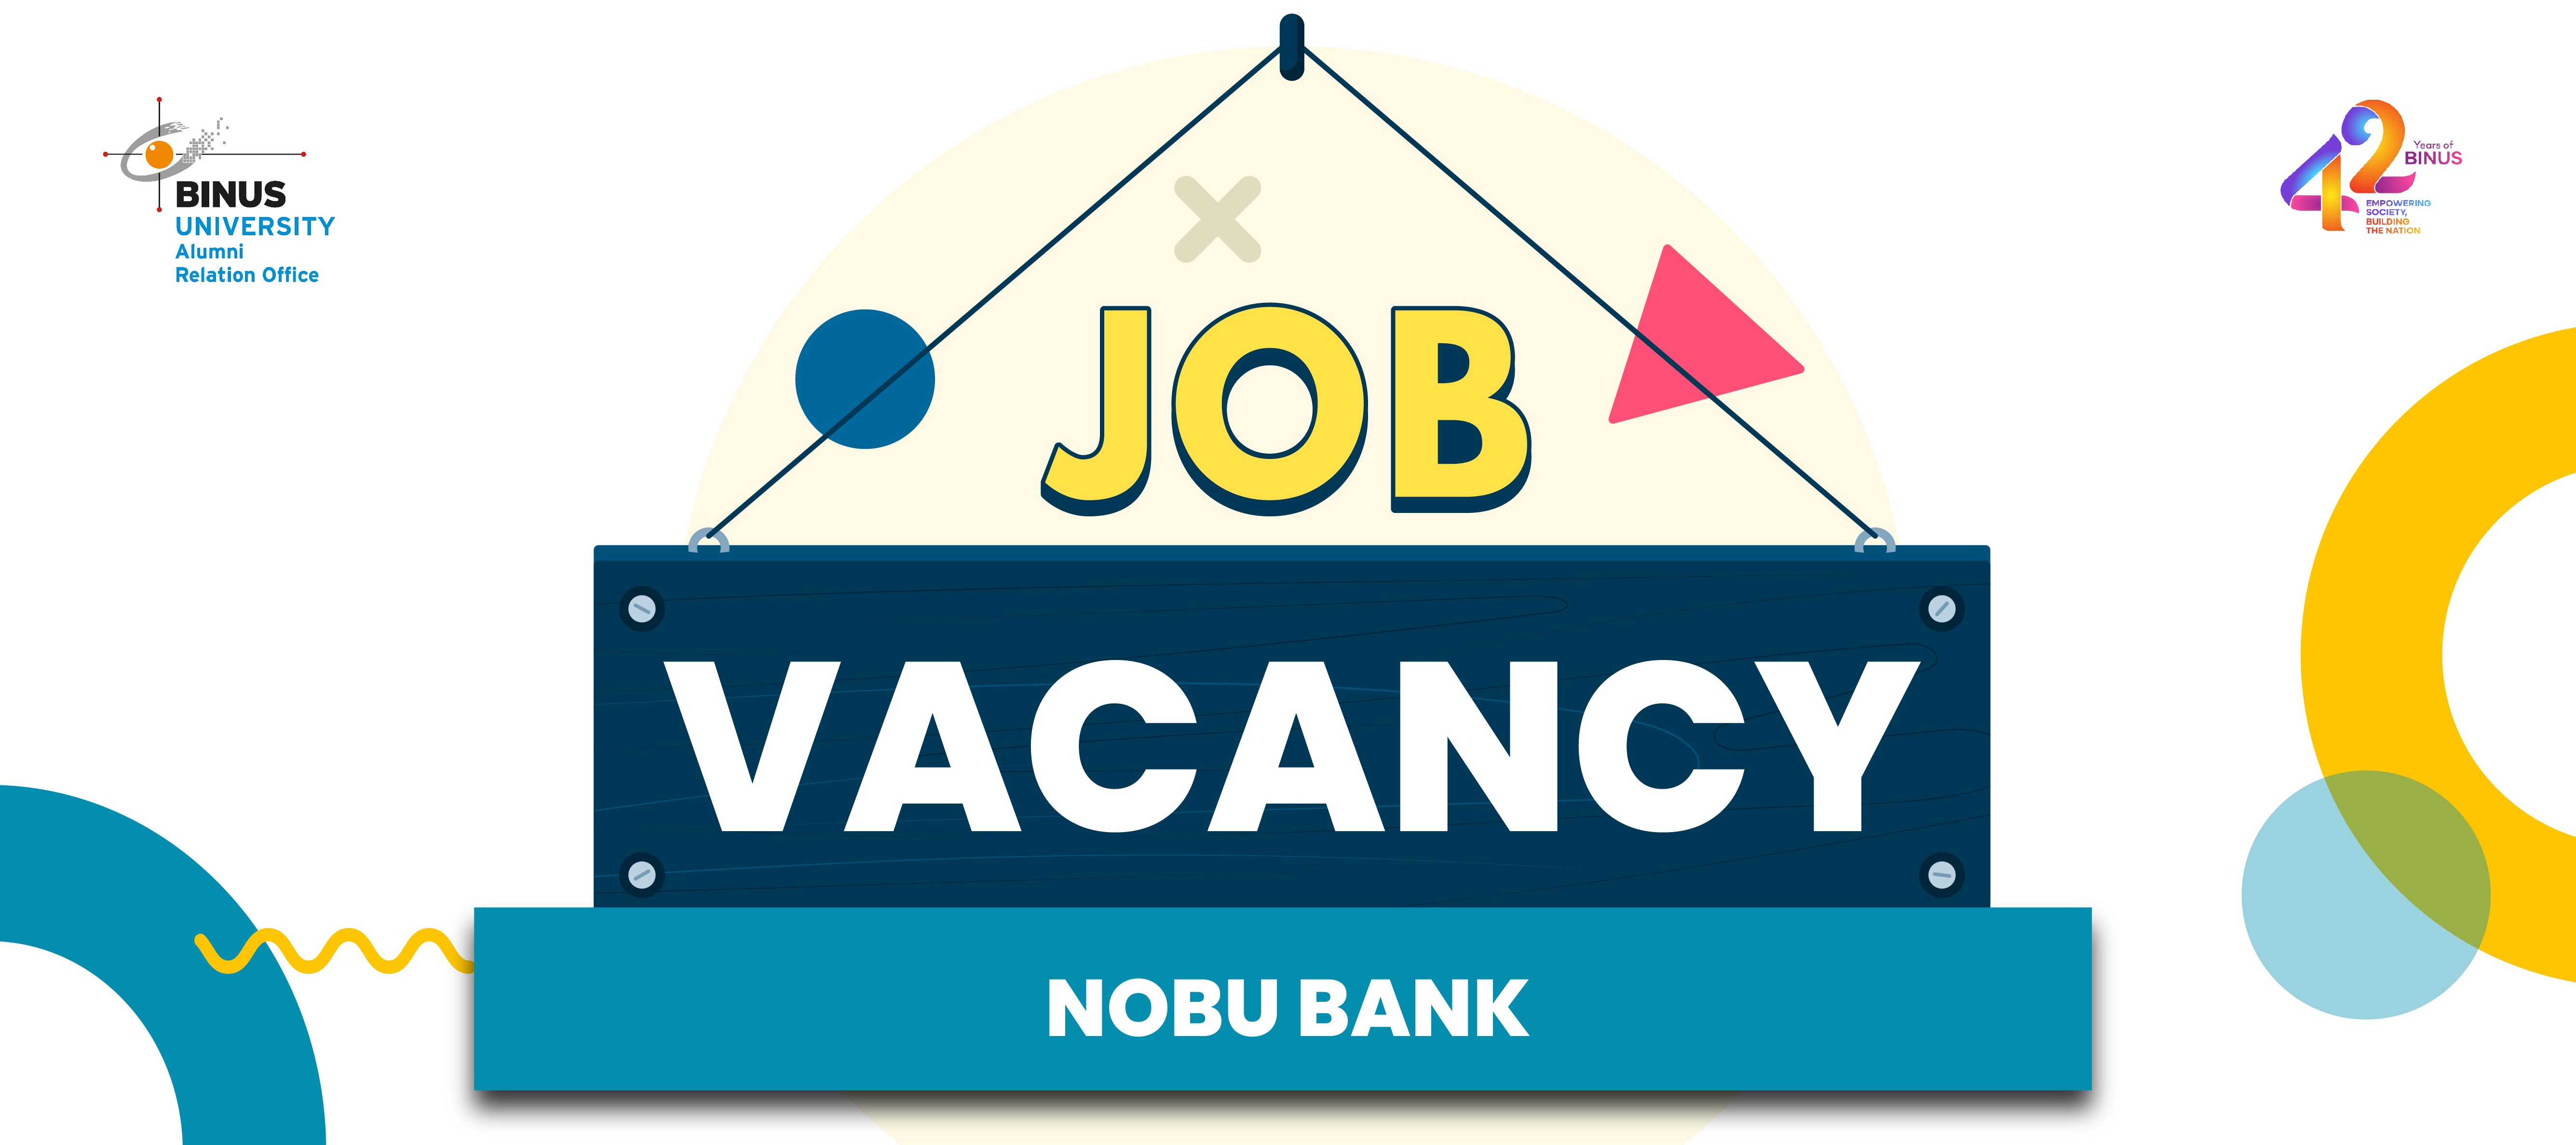 [JOB VACANCY] - NOBU BANK